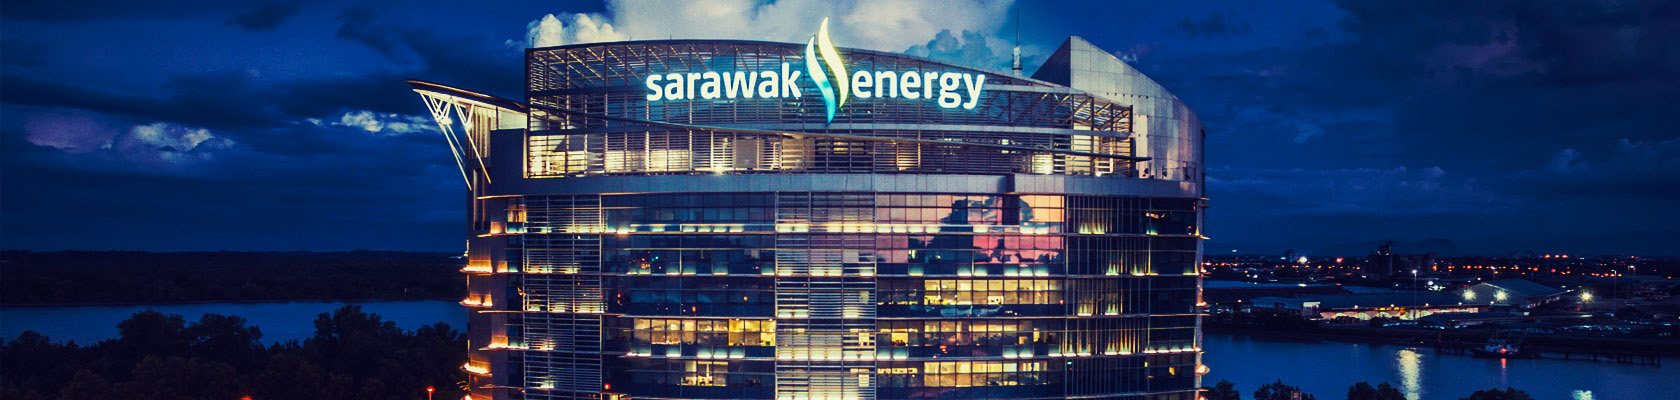 Sarawak energy internship